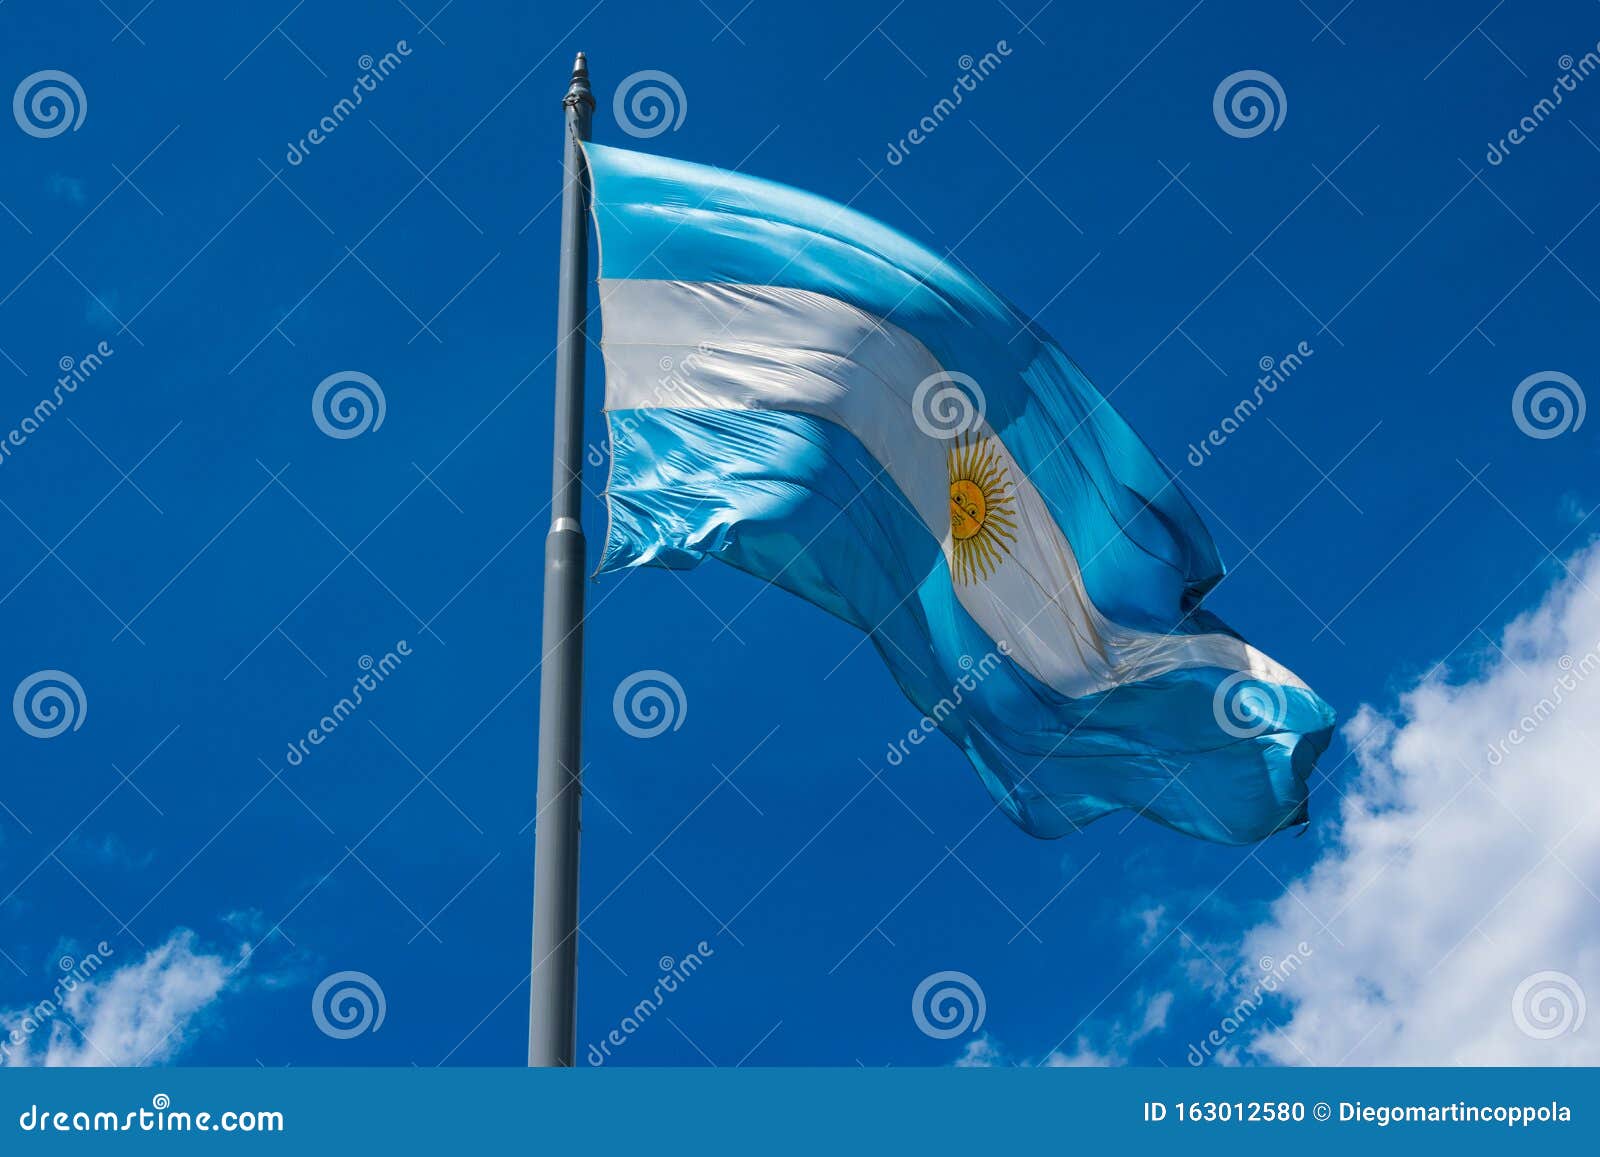 the flag of argentina bandera argentina - bandera nacional